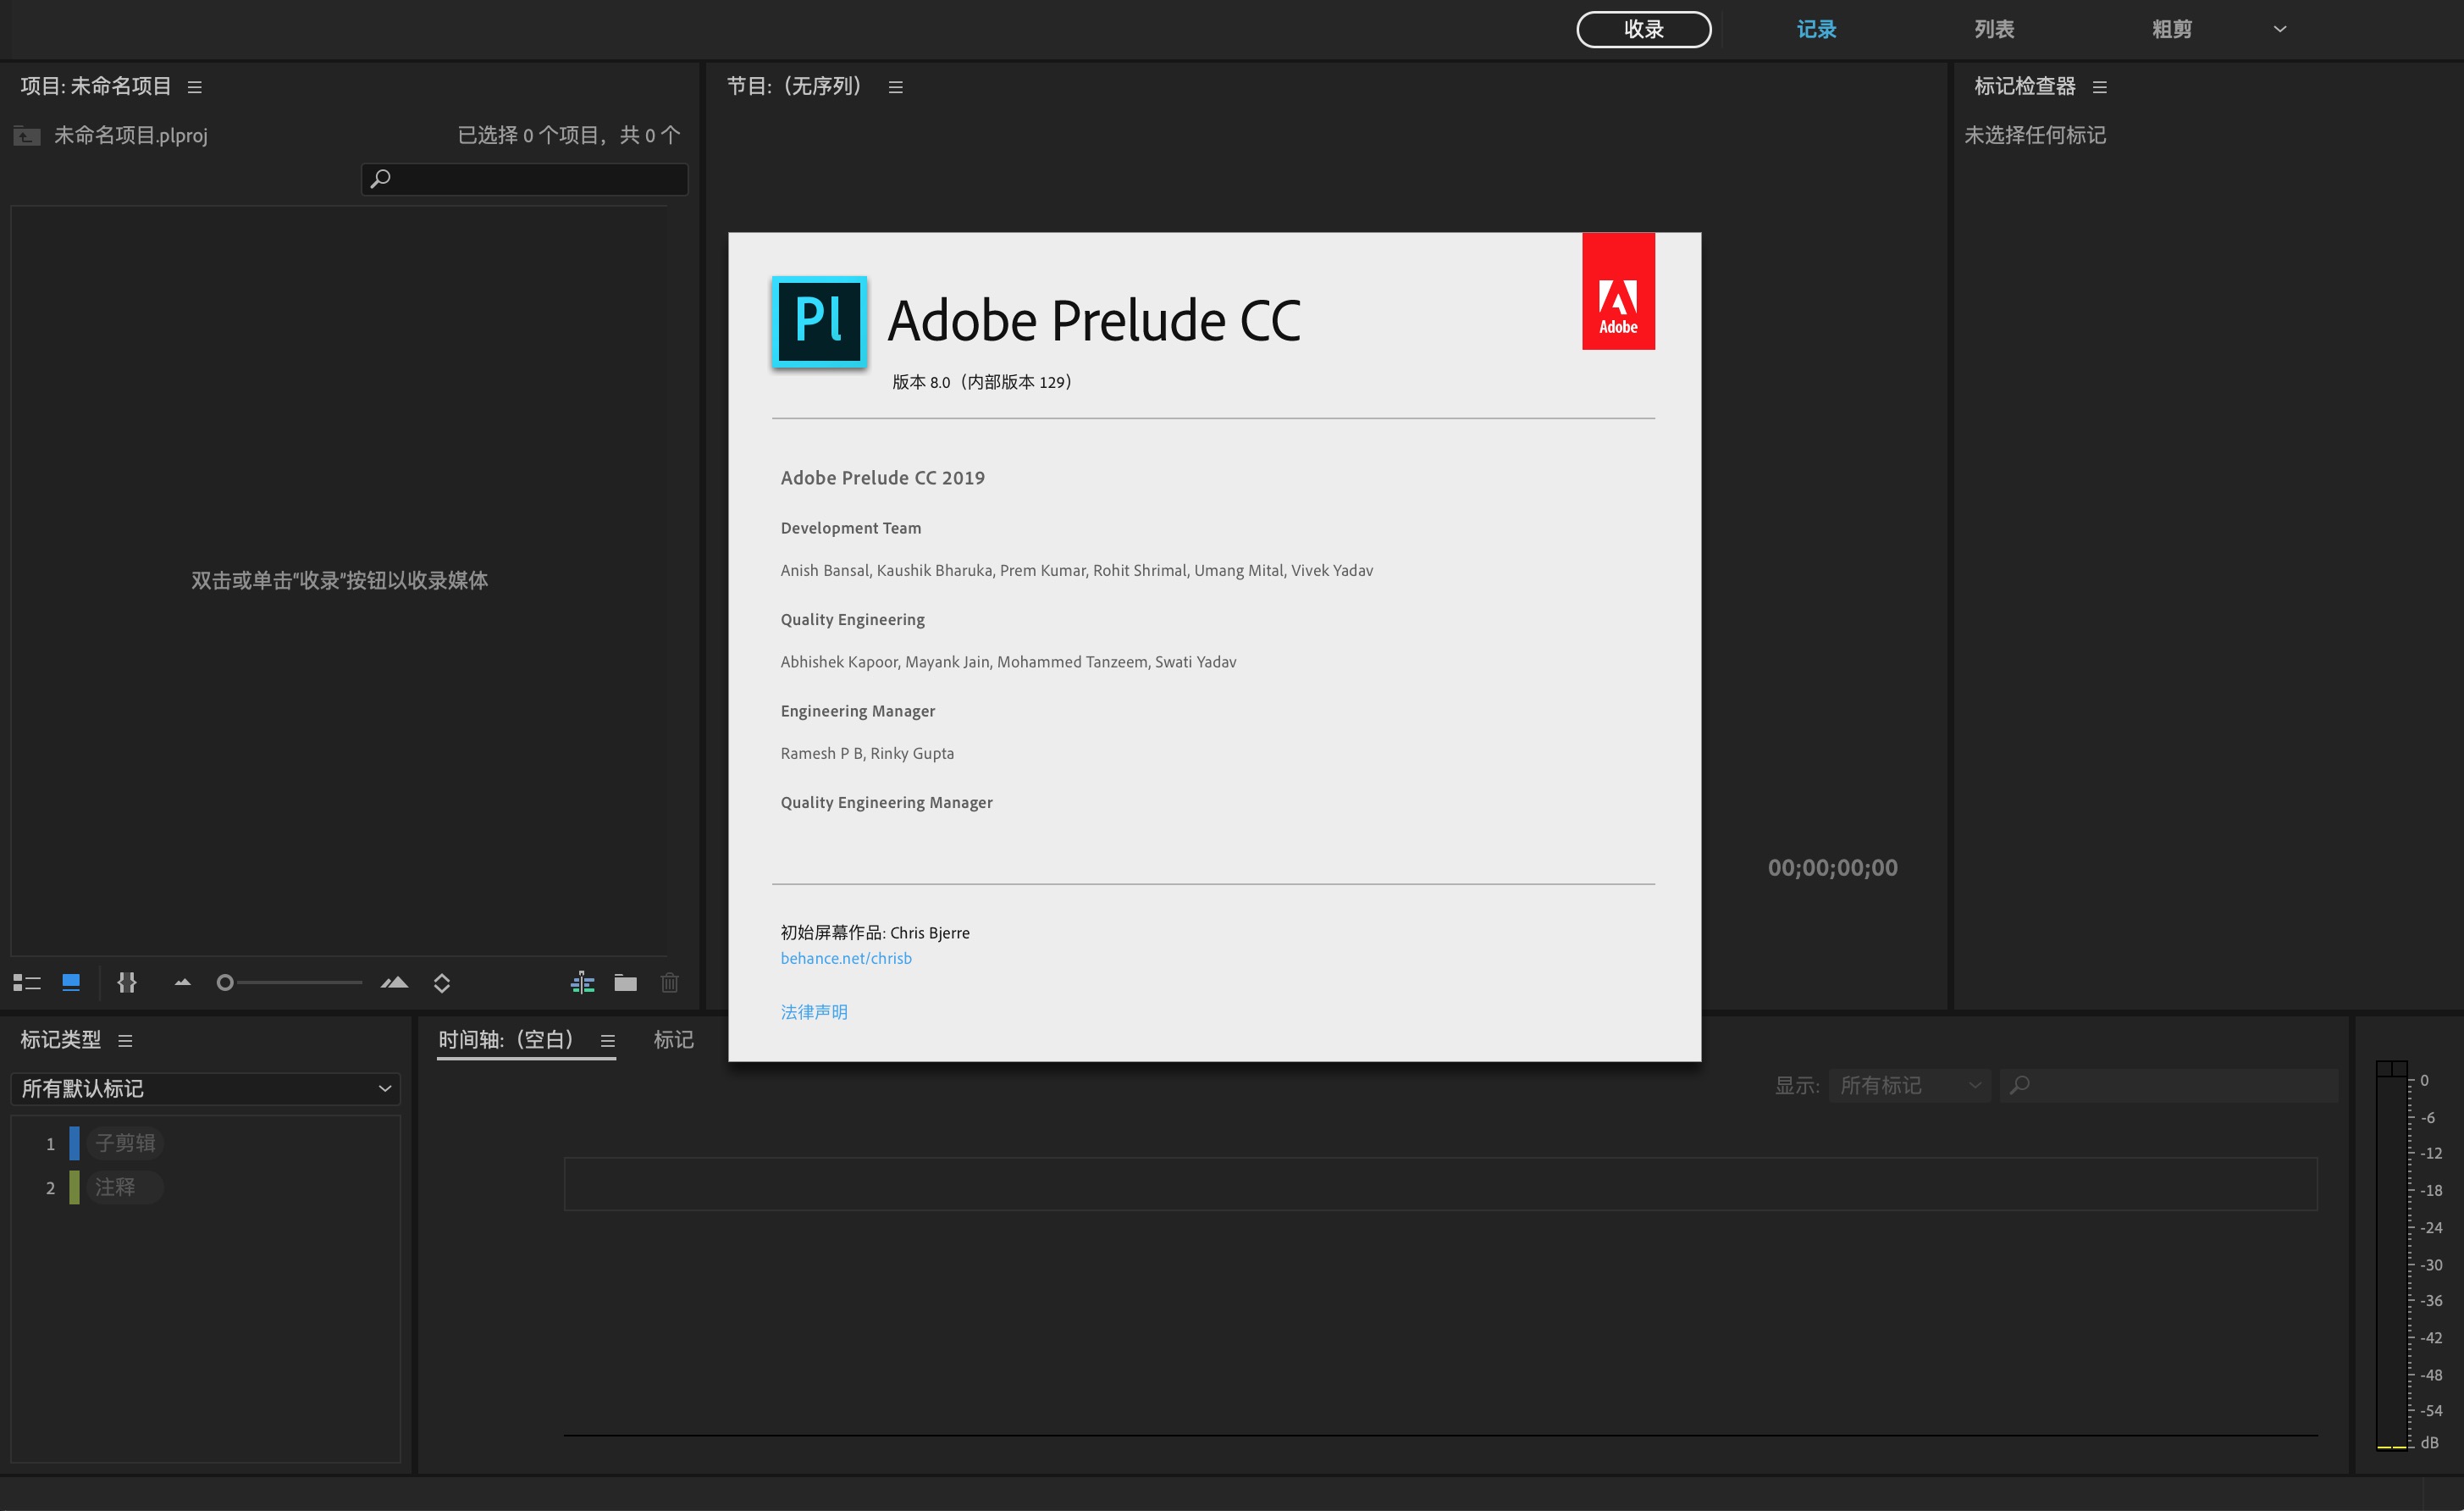 Adobe Prelude CC 2019 8.1 for Mac|Mac版下载 | PL CC 2019